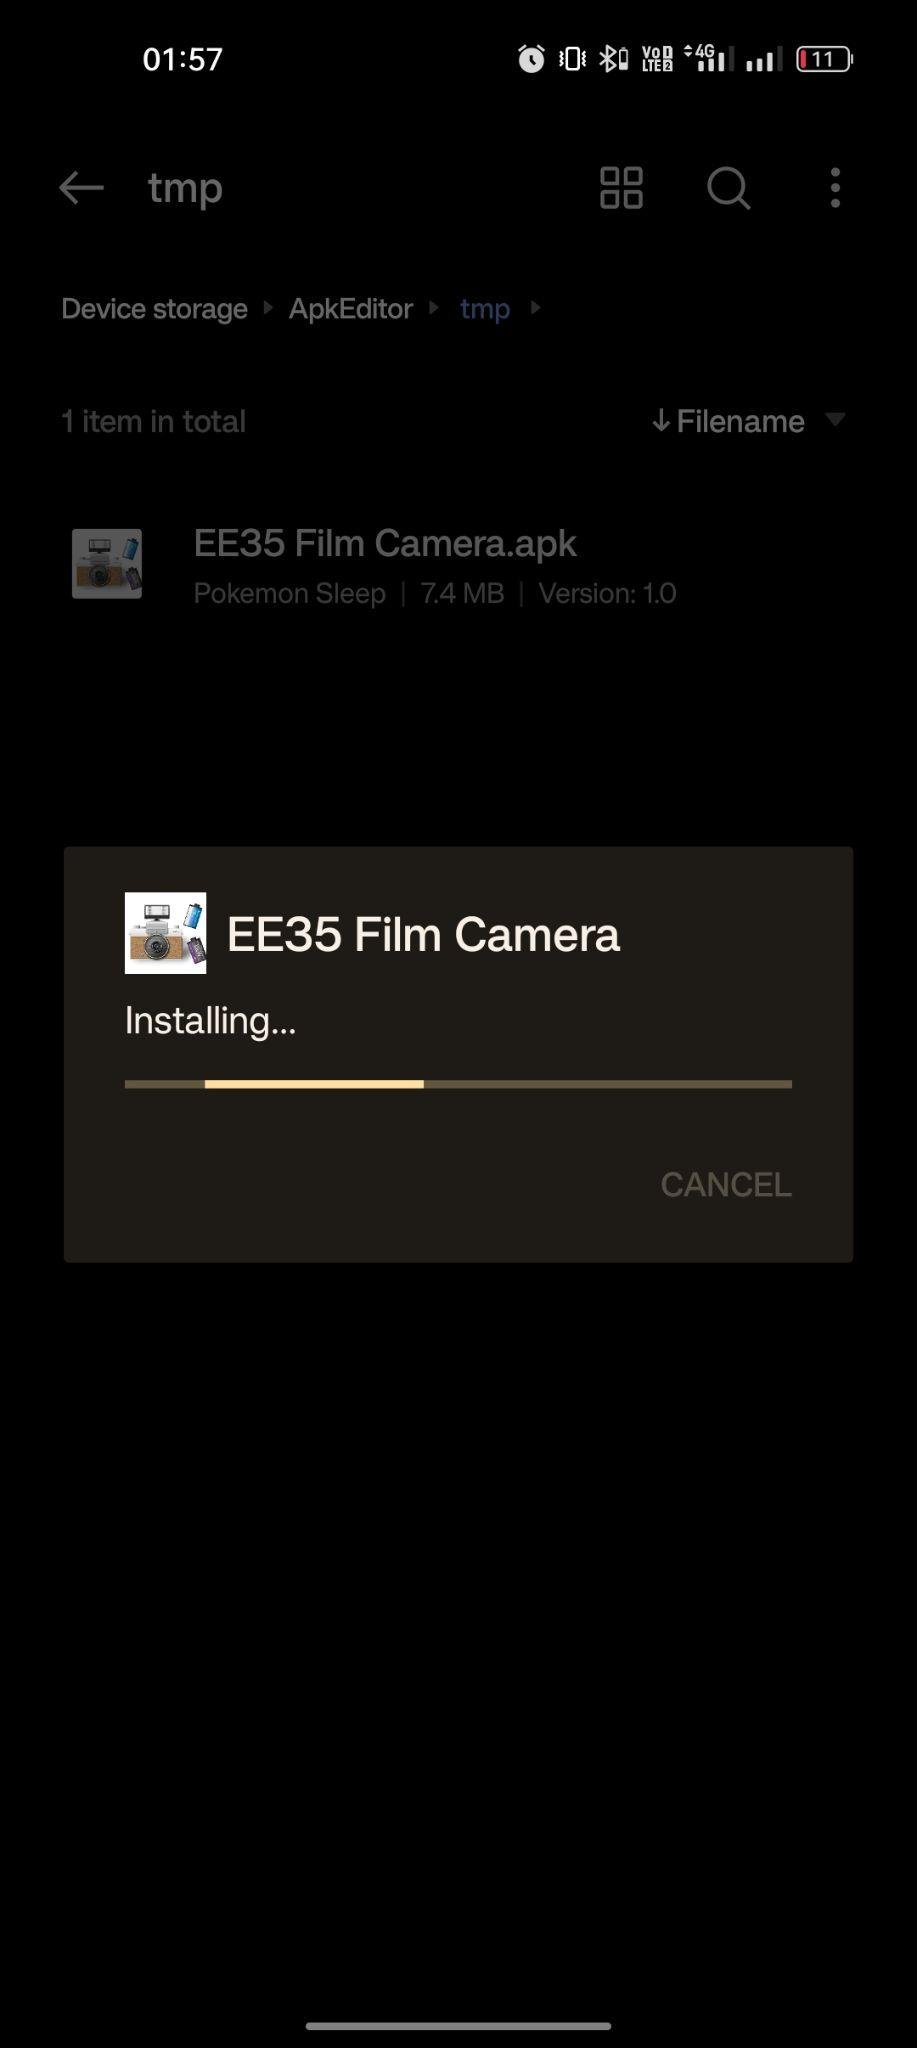 EE35 Film Camera apk installing